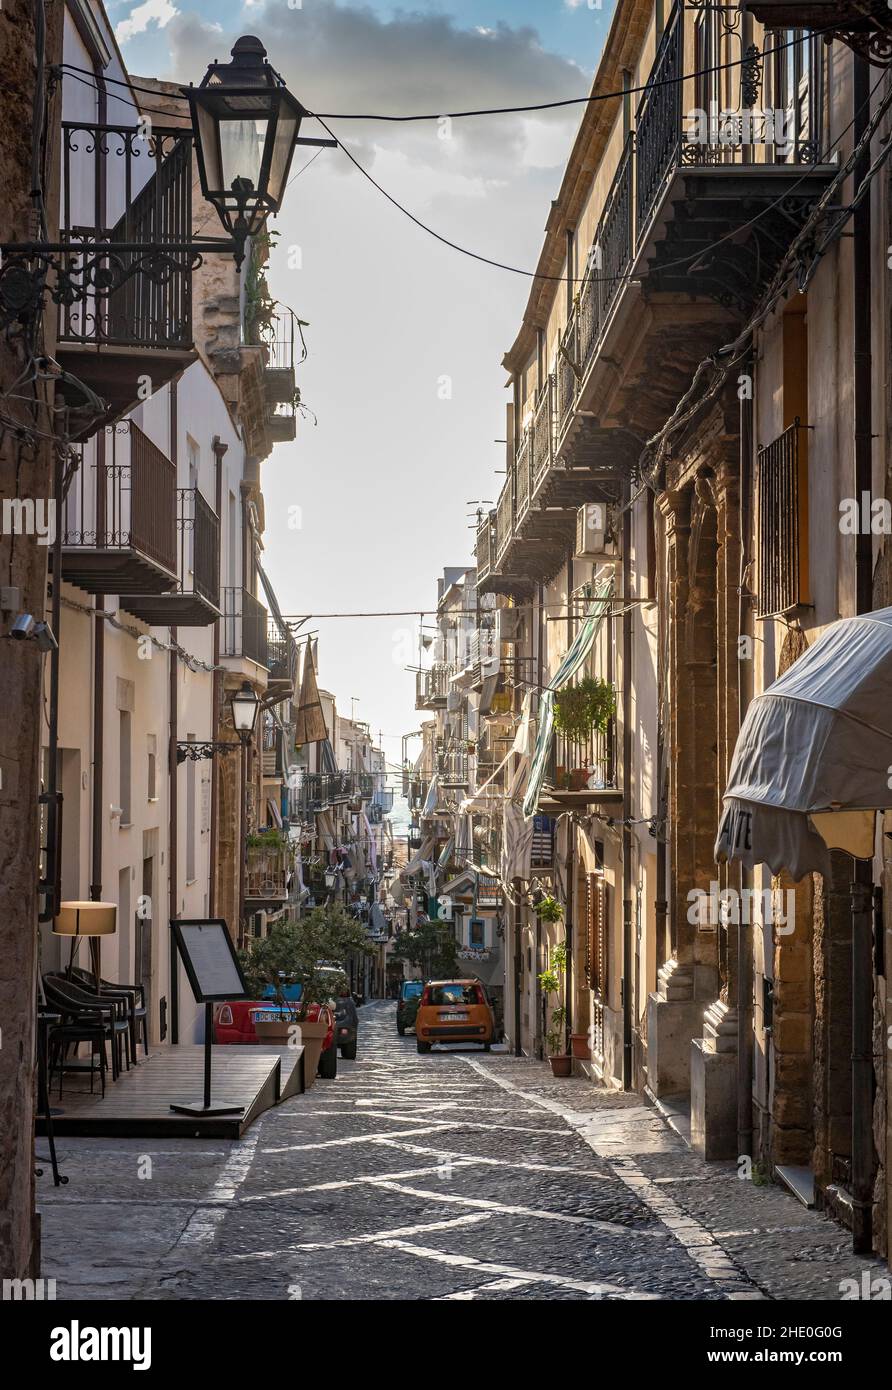 Strada stretta, Cefalù (Cefalu), Sicilia, Italia Foto Stock